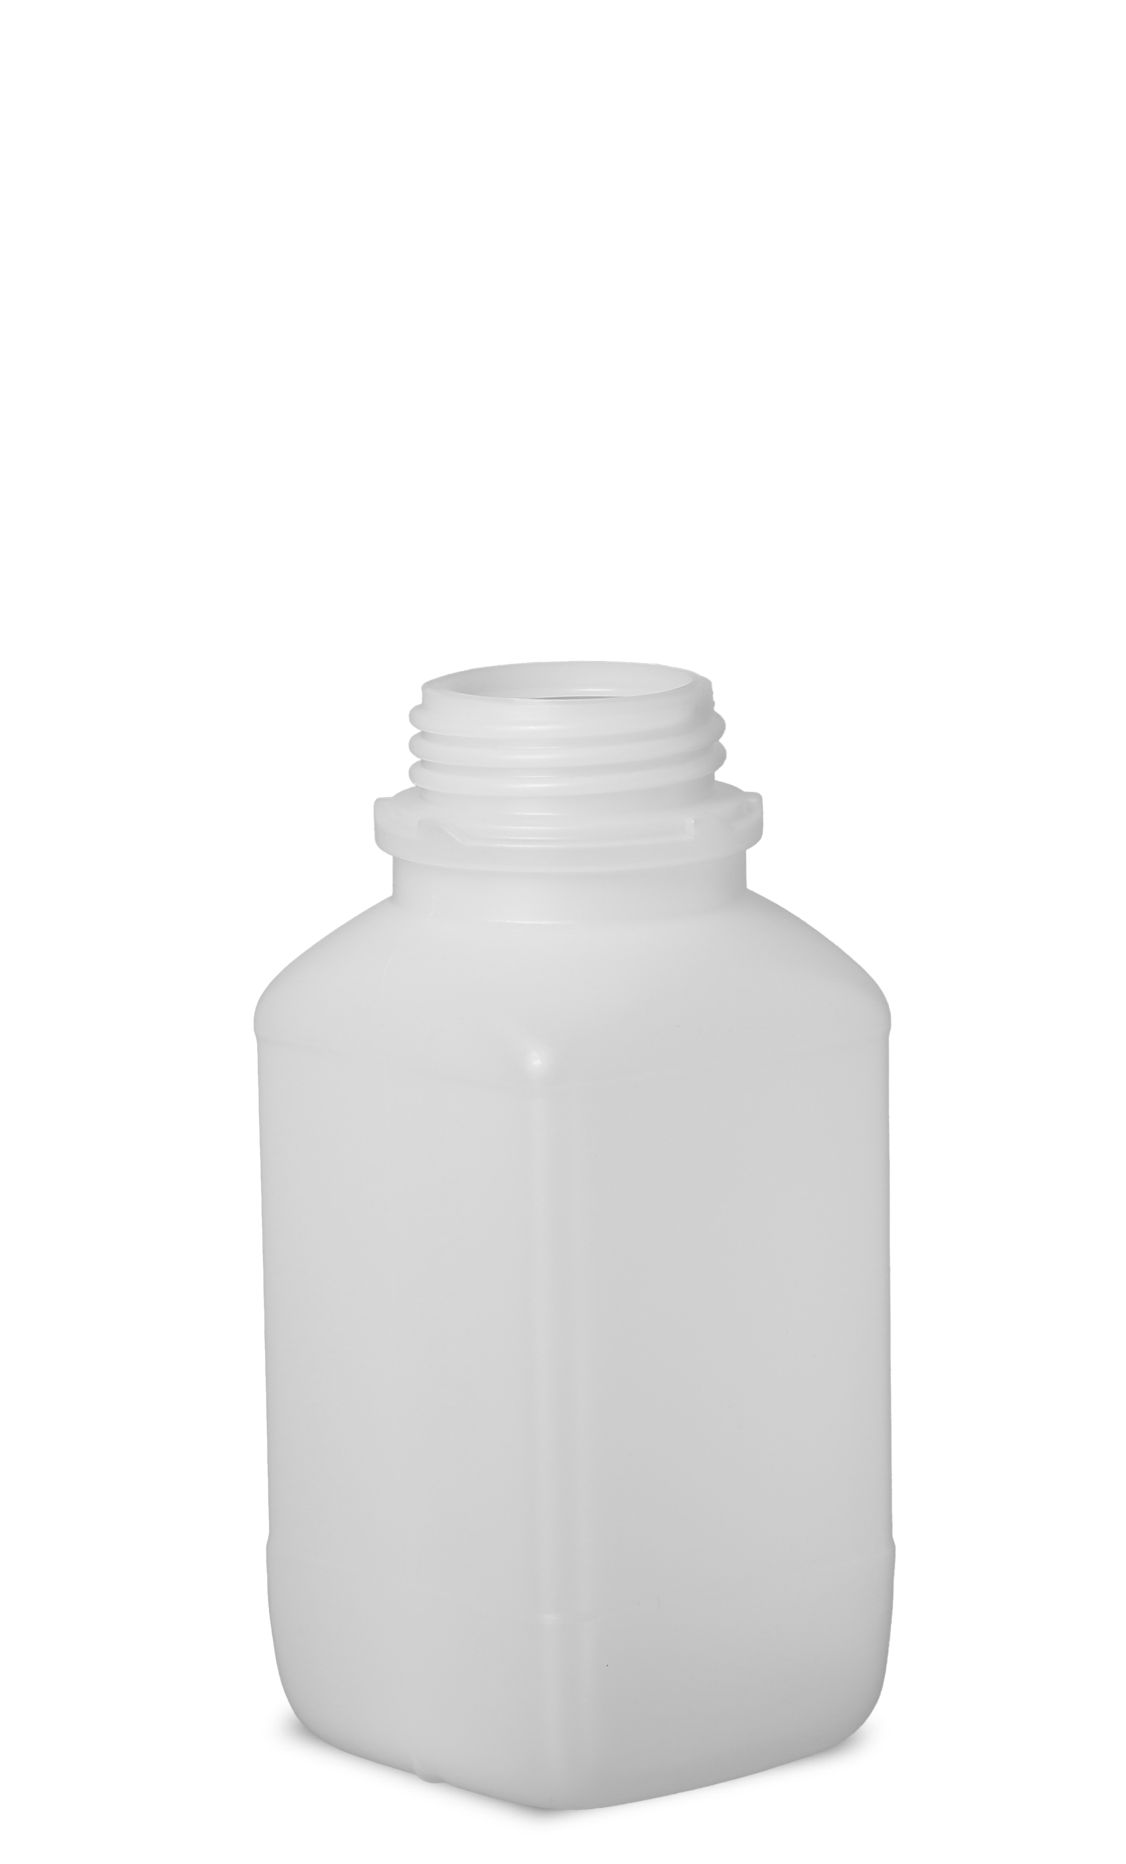 750 ml bottle series wide mouth bottle UN